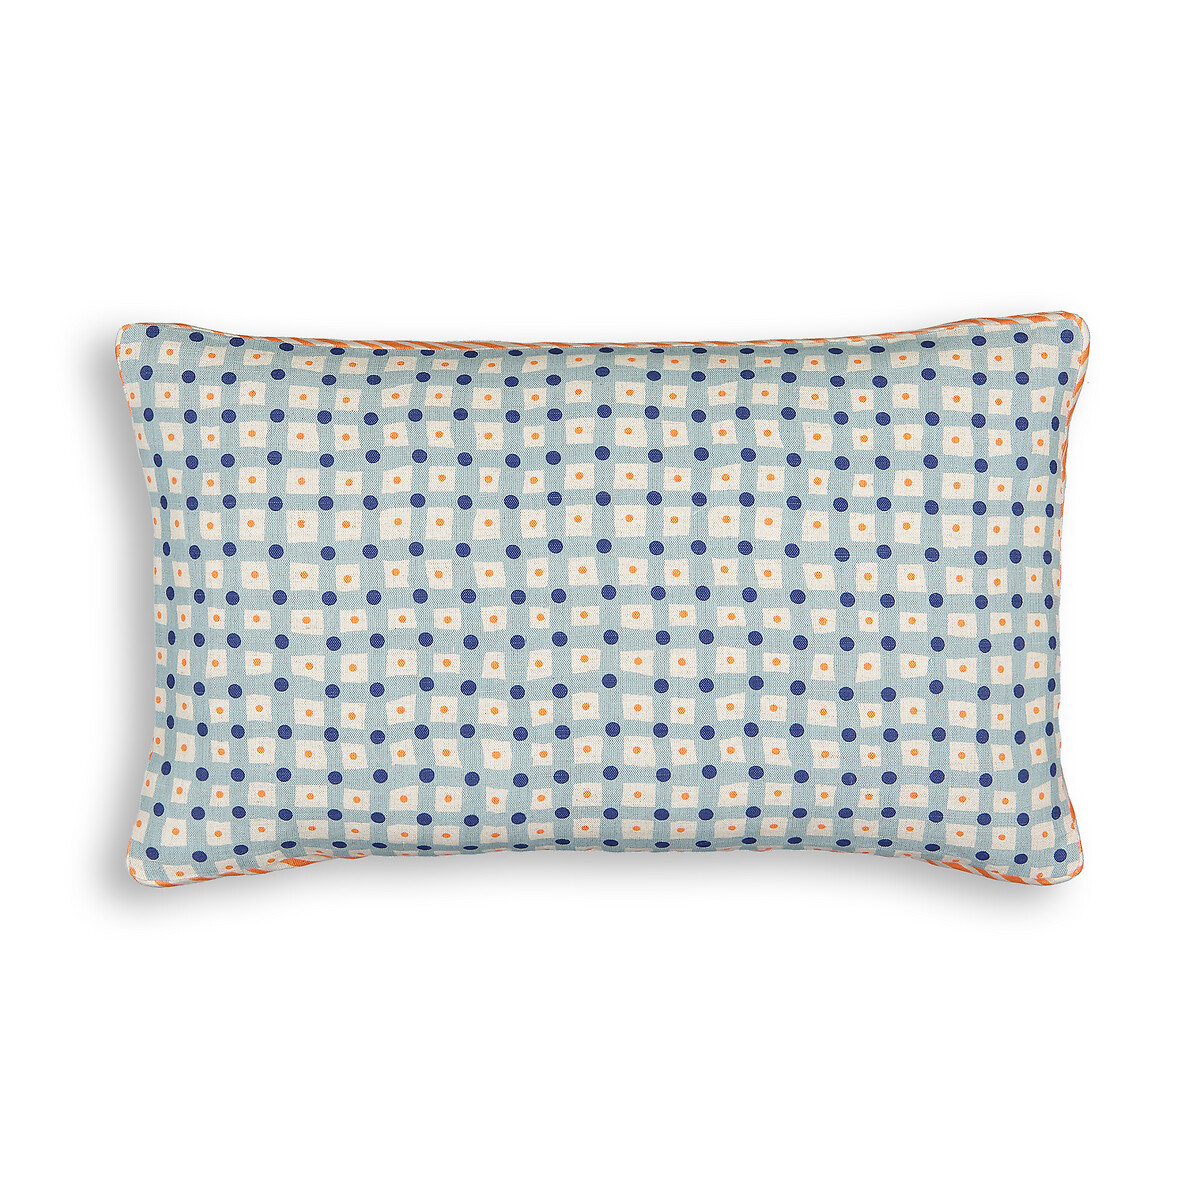 Чехол LaRedoute Для подушки из хлопка и льна Lalo 50 x 30 см синий, размер 50 x 30 см